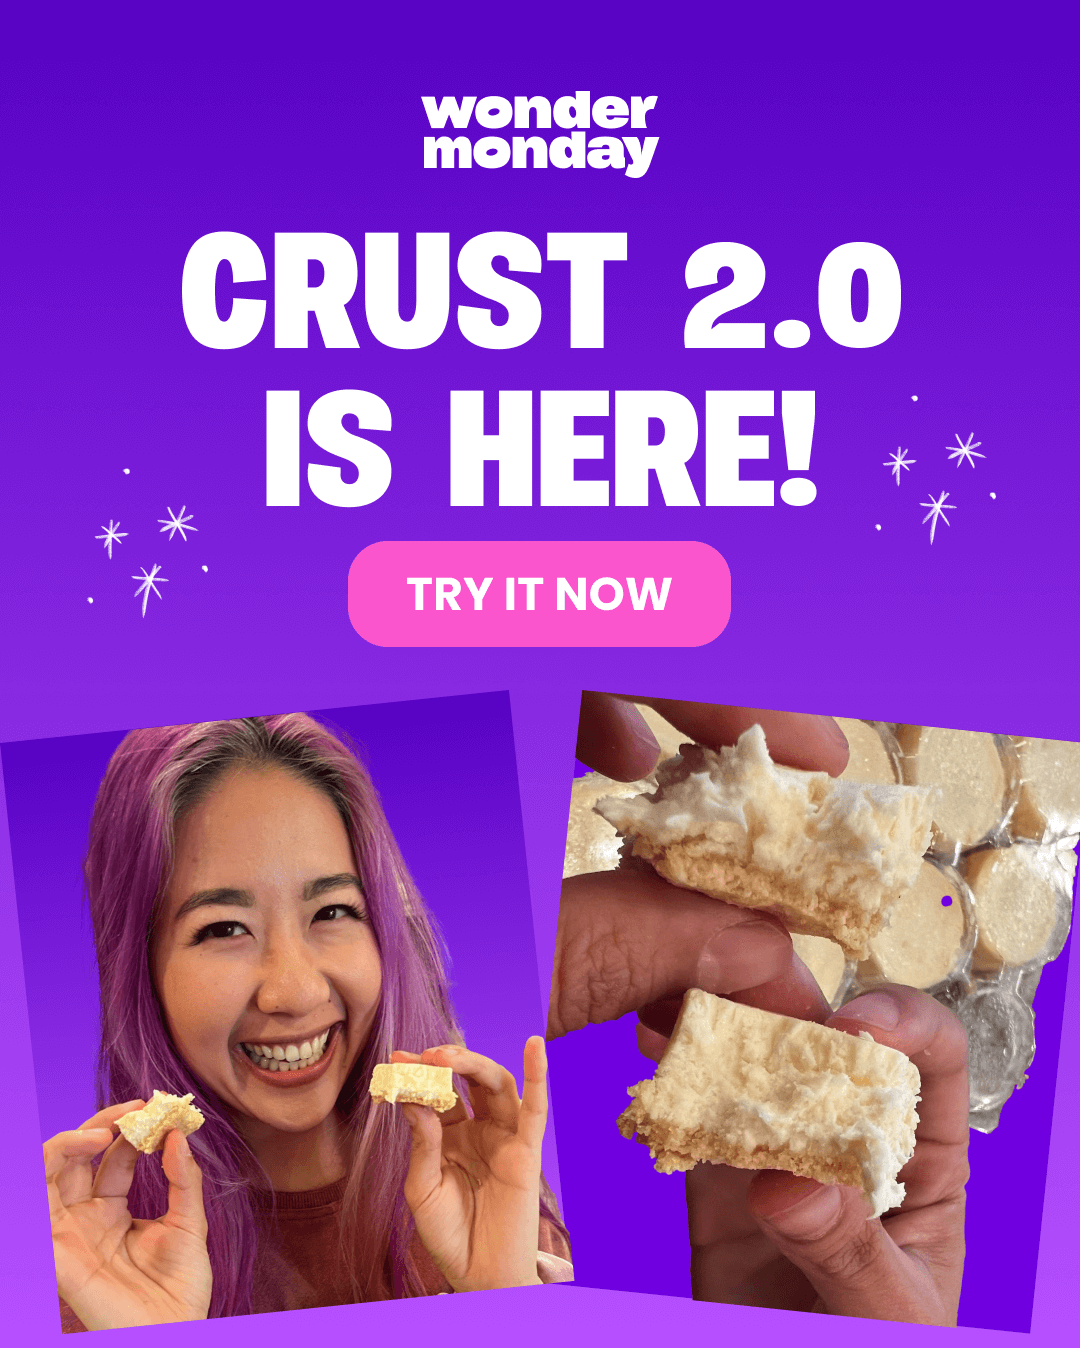 Crust 2.0 is here!